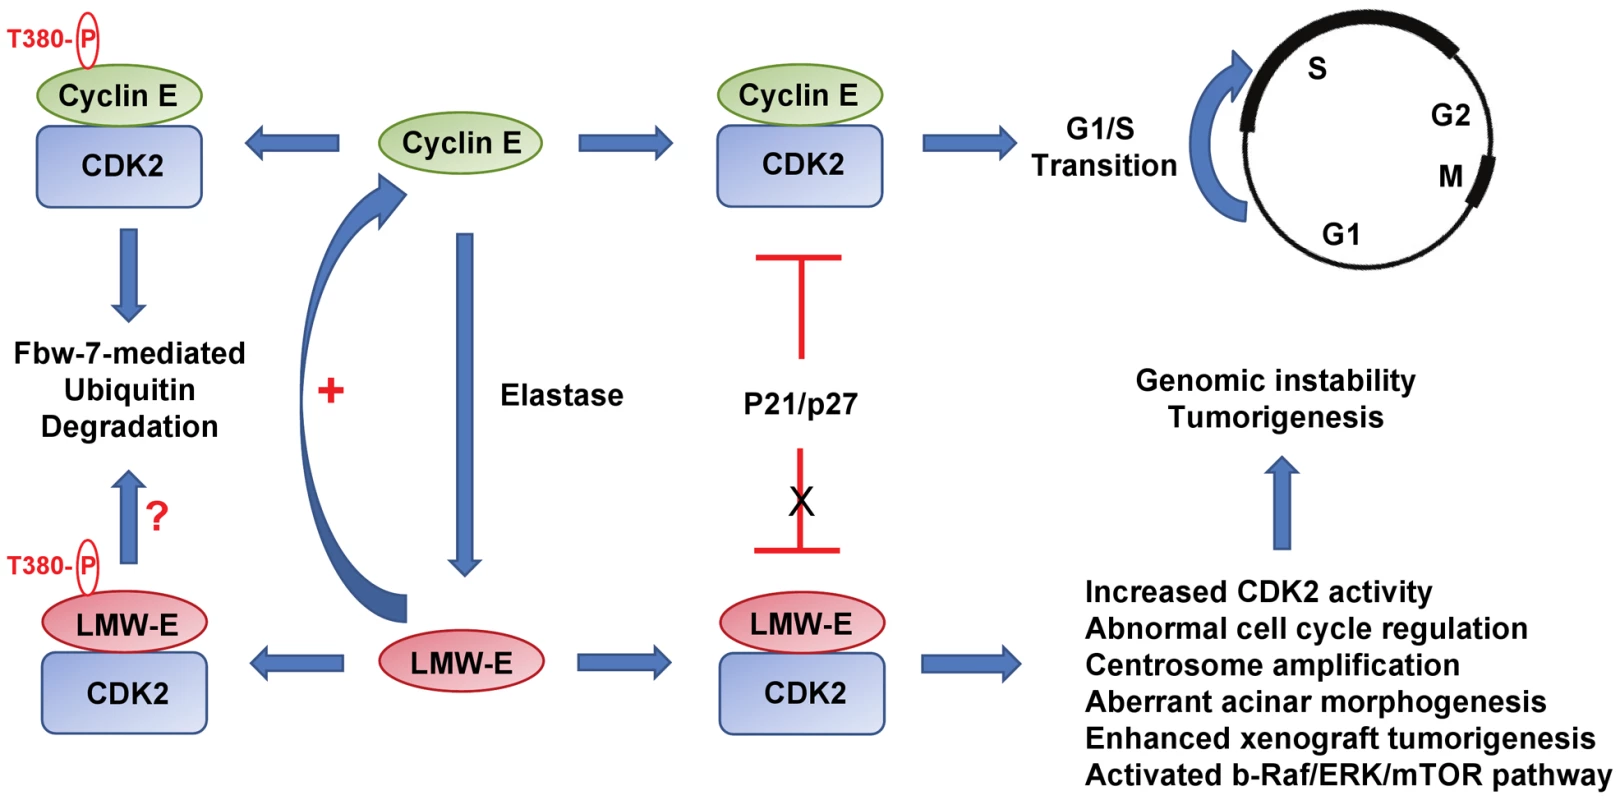 Low molecular weight cyclin E promotes tumorigenesis.